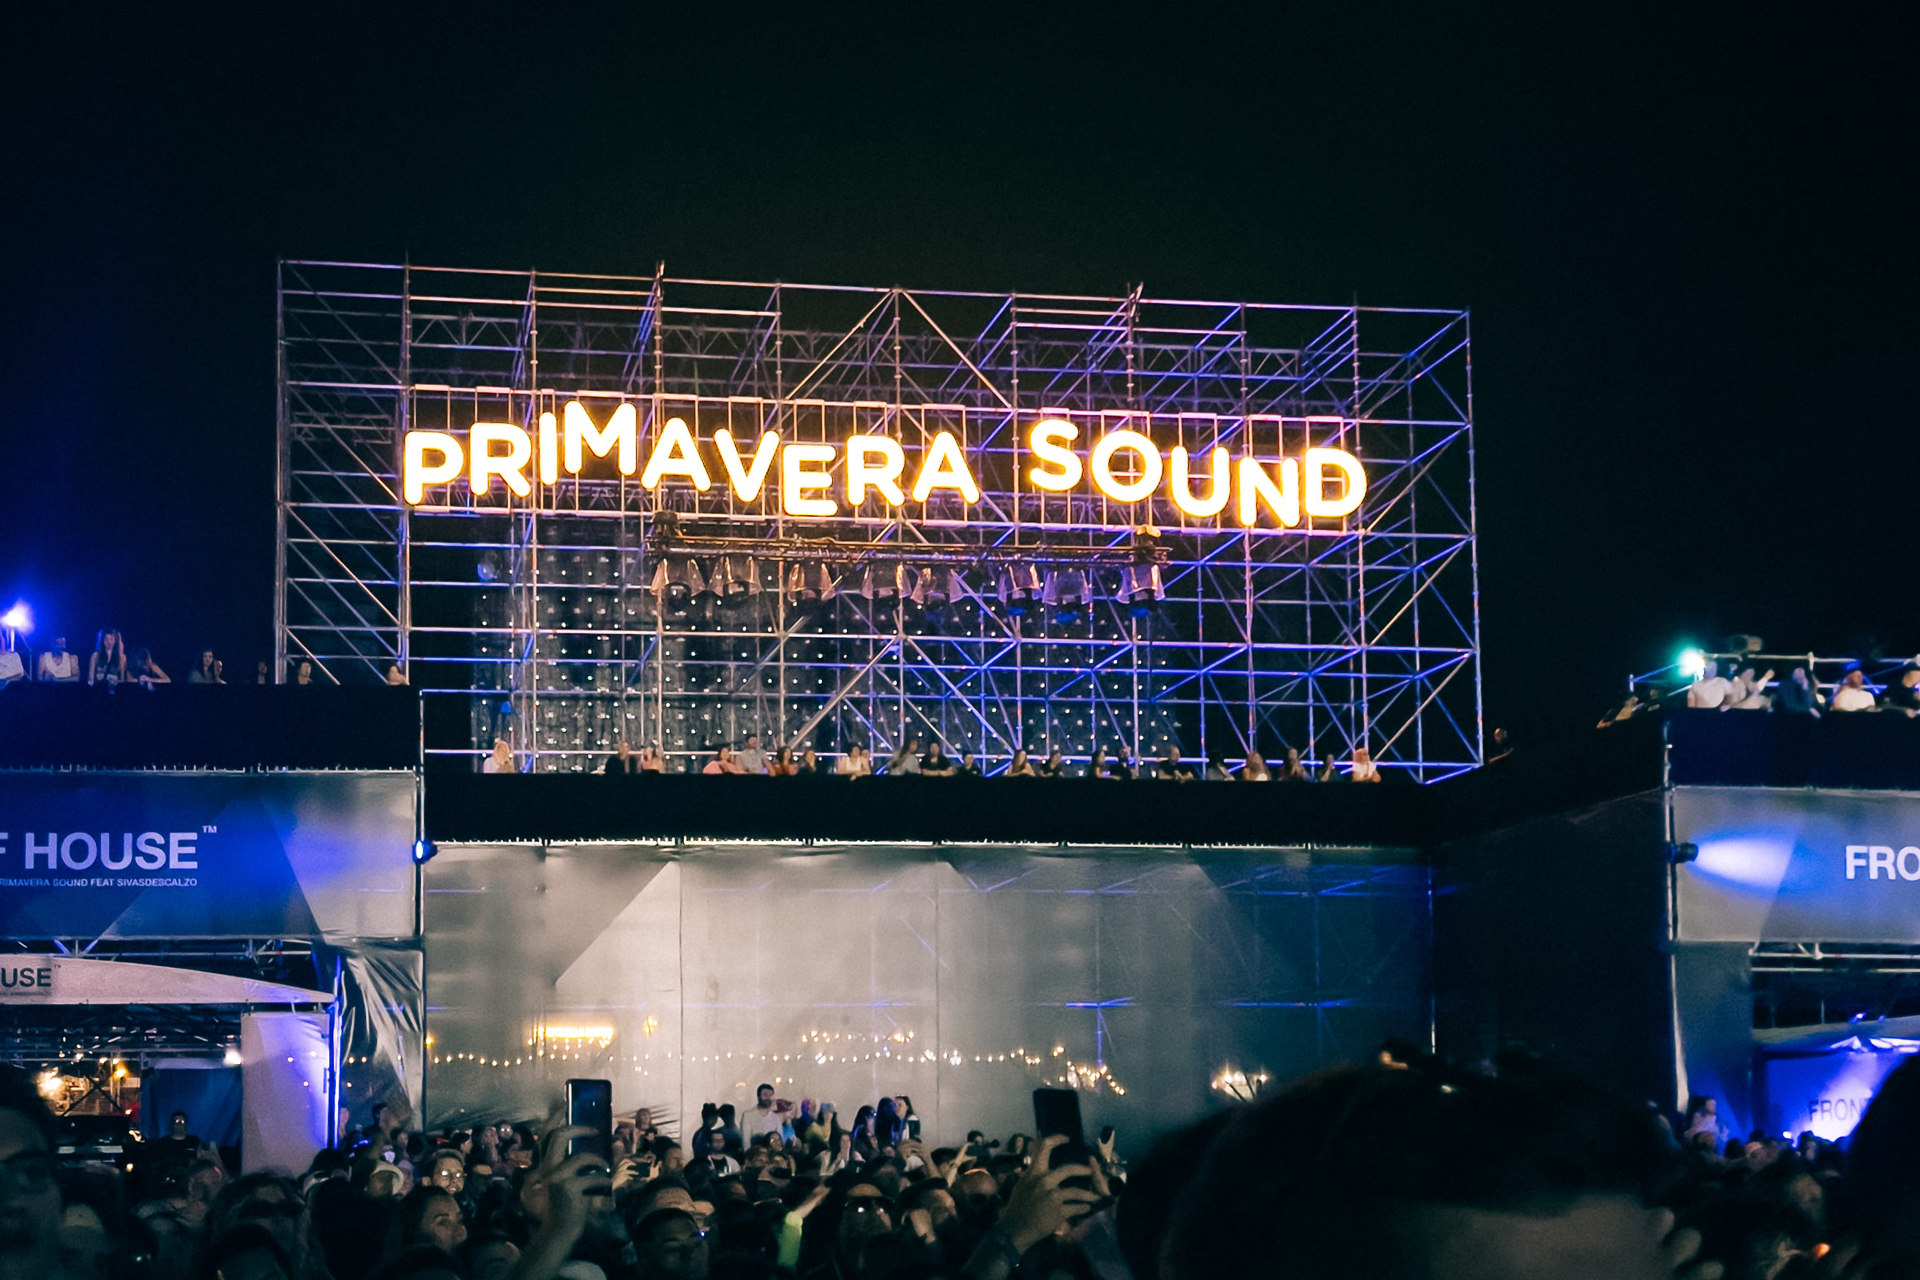 Primavera Sound light up sign at night at the festival